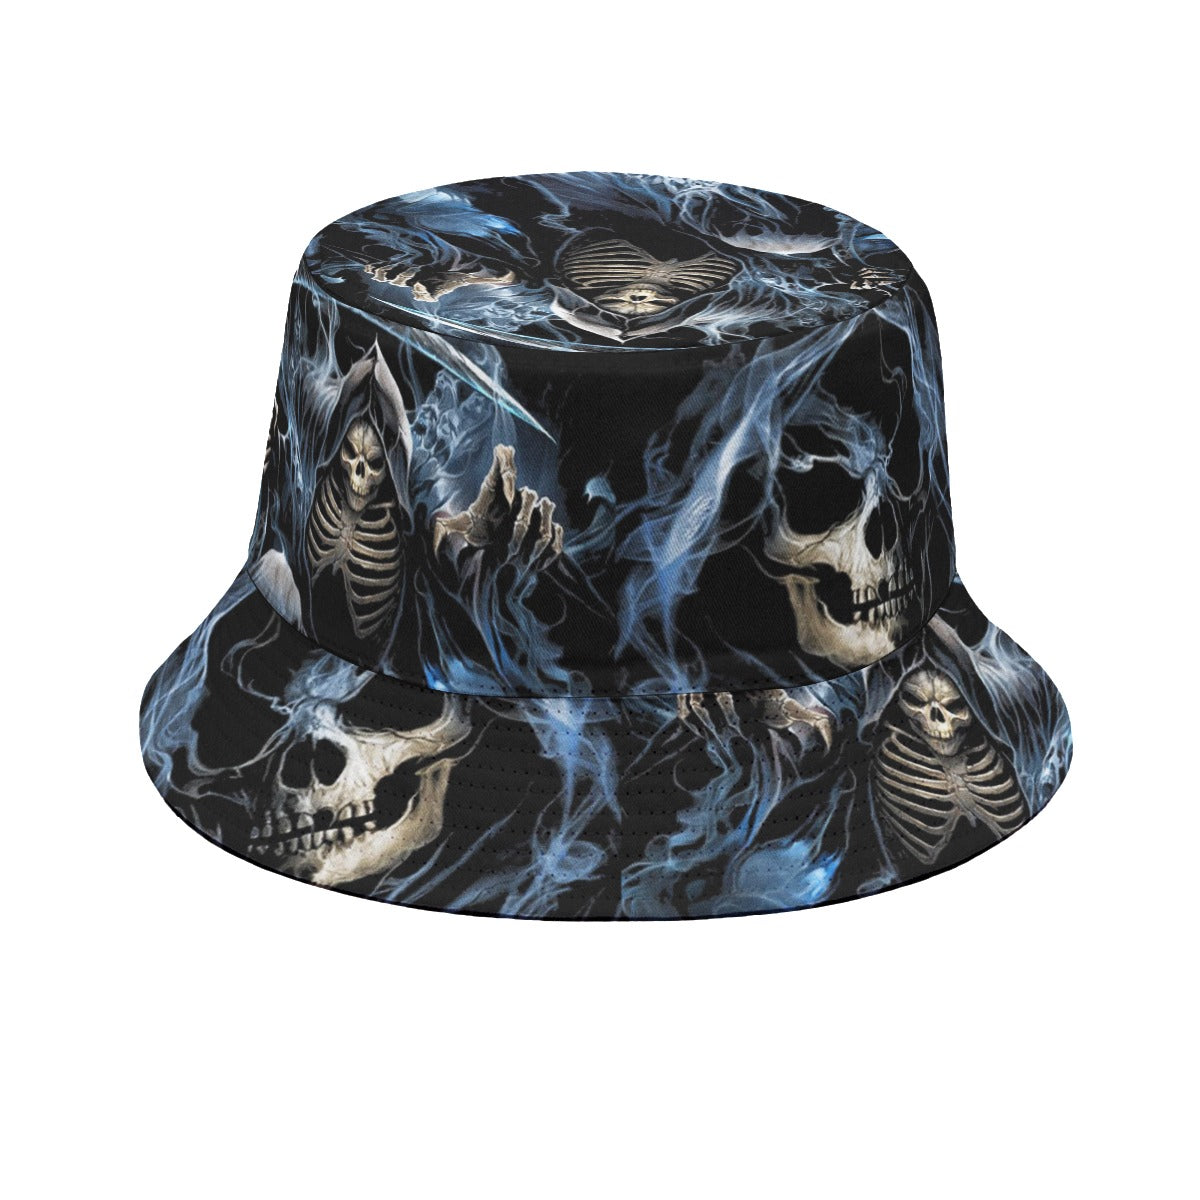 Grim reaper gothic skull Fisherman hat, Halloween skeleton hat cap